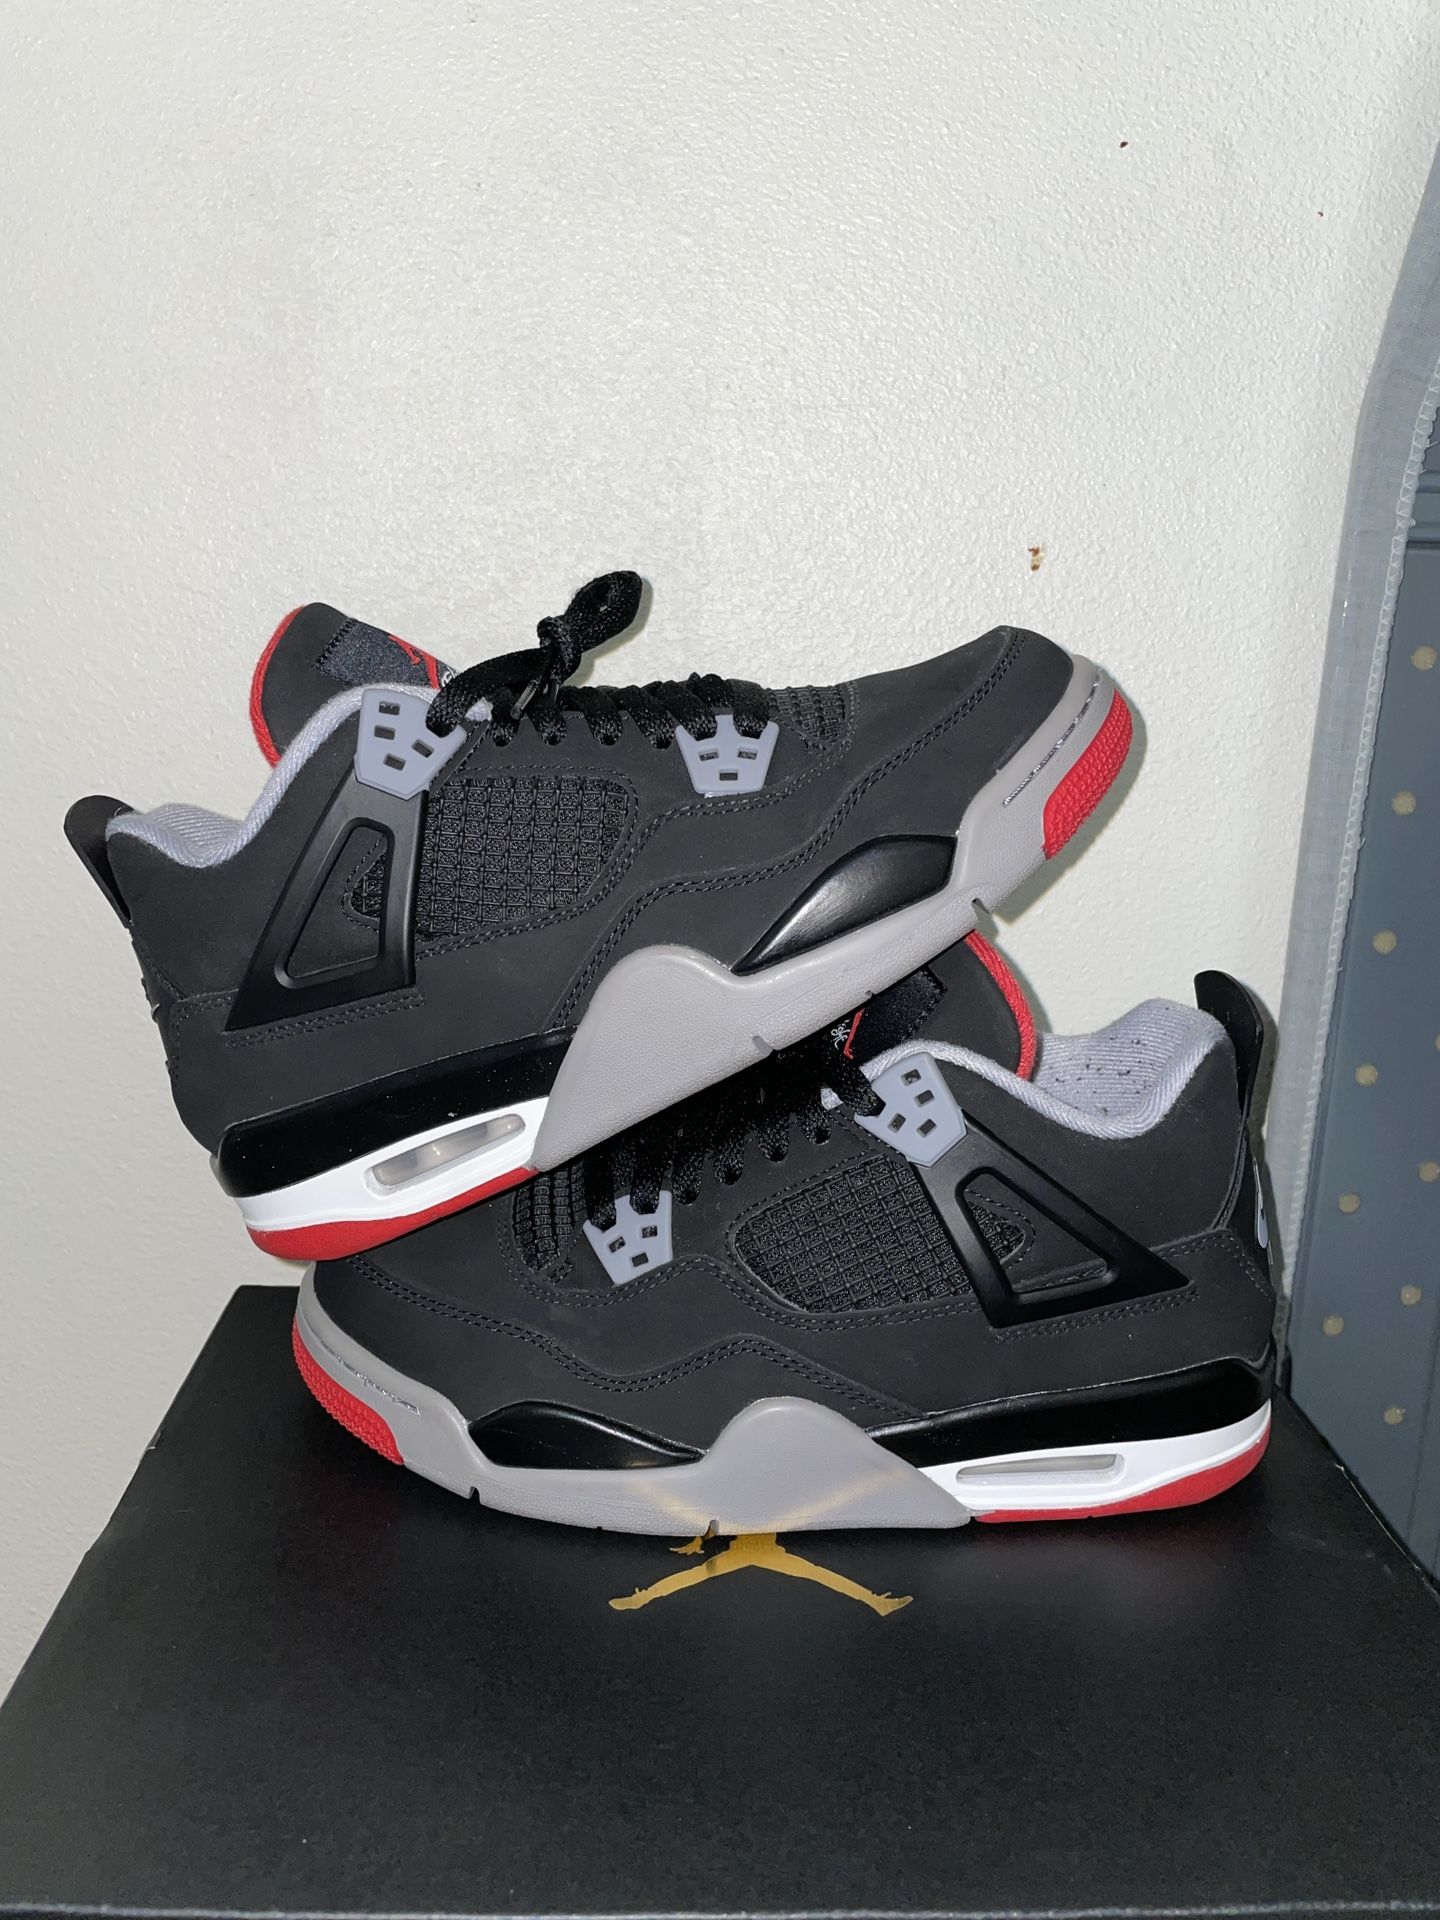 Air Jordan 4 Bred Size 6.5y